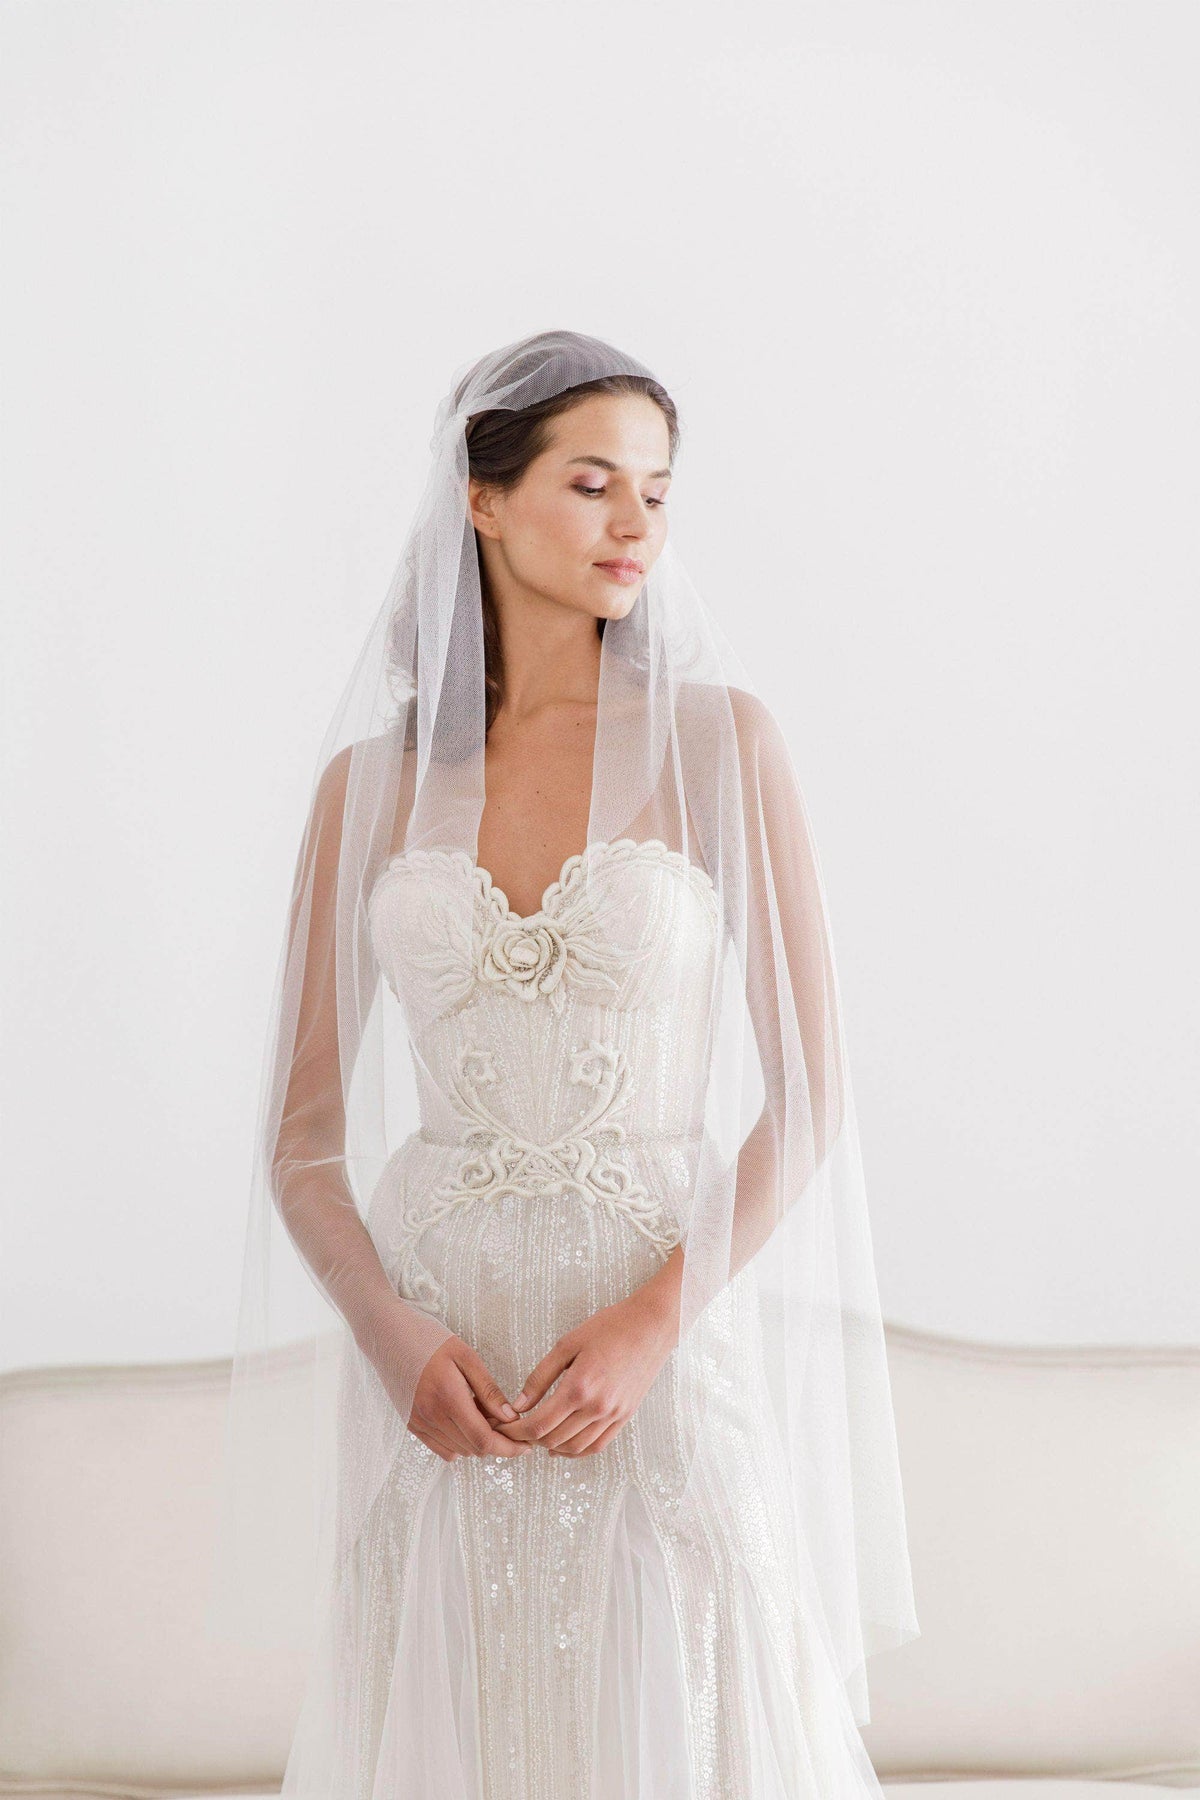 Wedding Veil white / Cathedral length White - Silk style juliet cap wedding veil - &#39;Dorothy&#39;